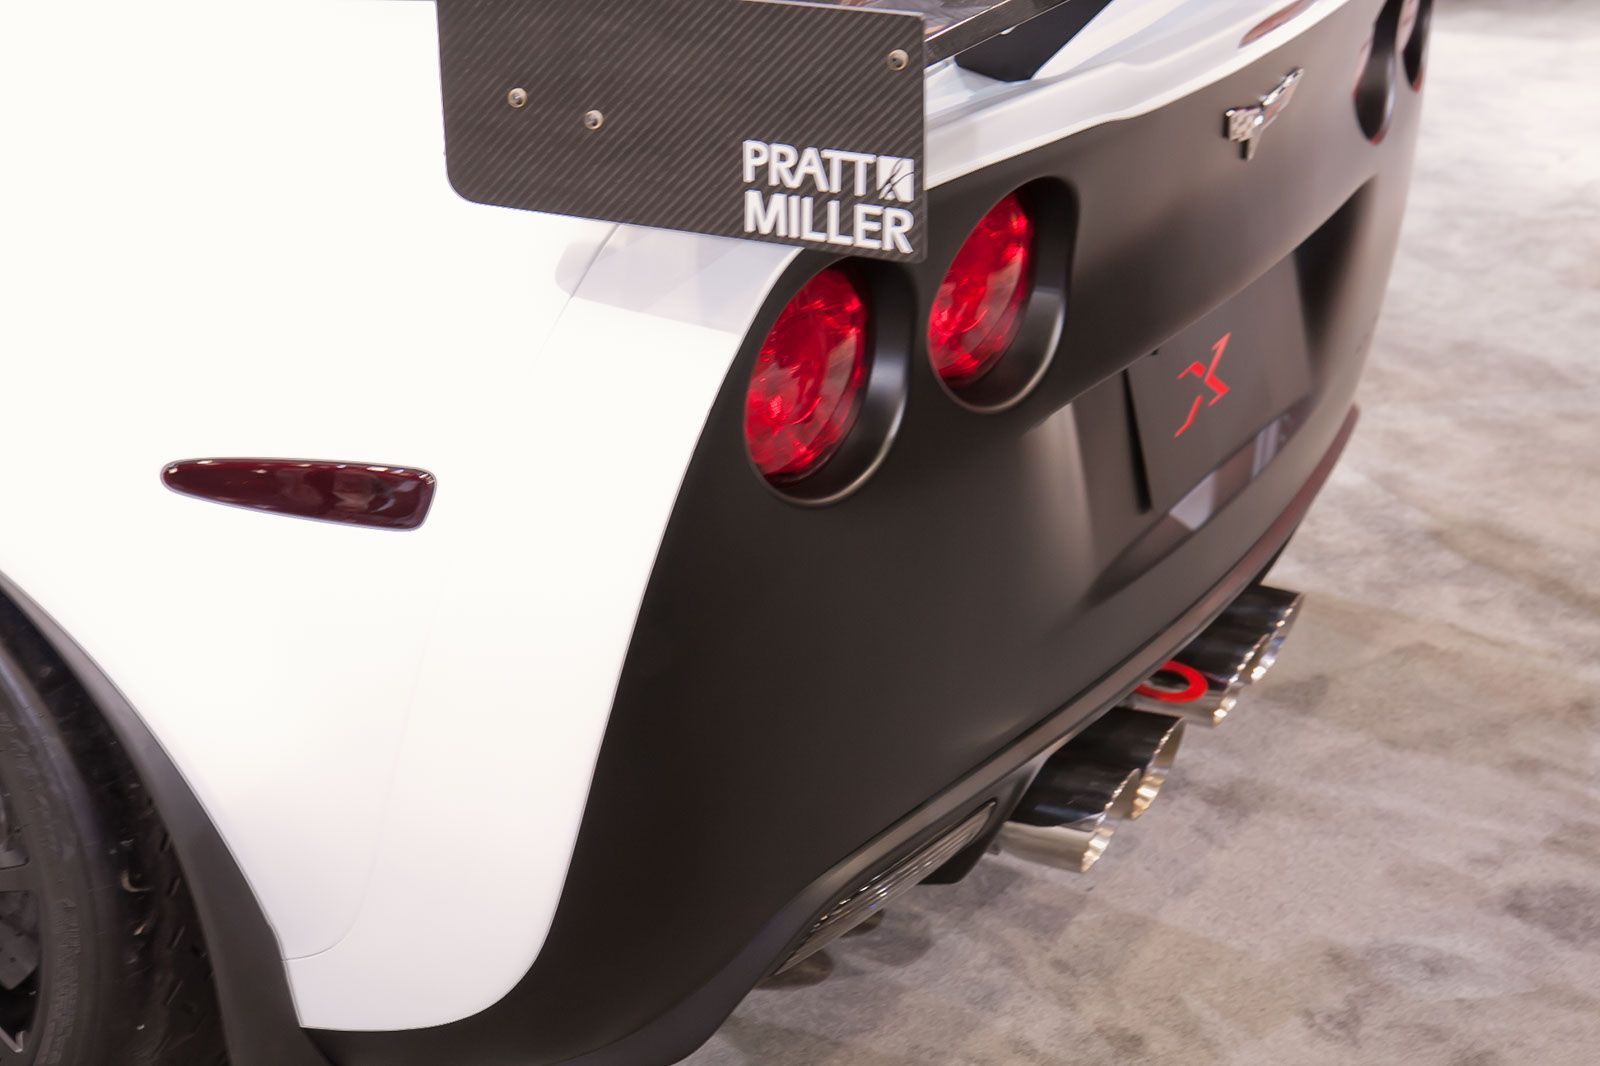 2010 Corvette Z06X Track Car Concept